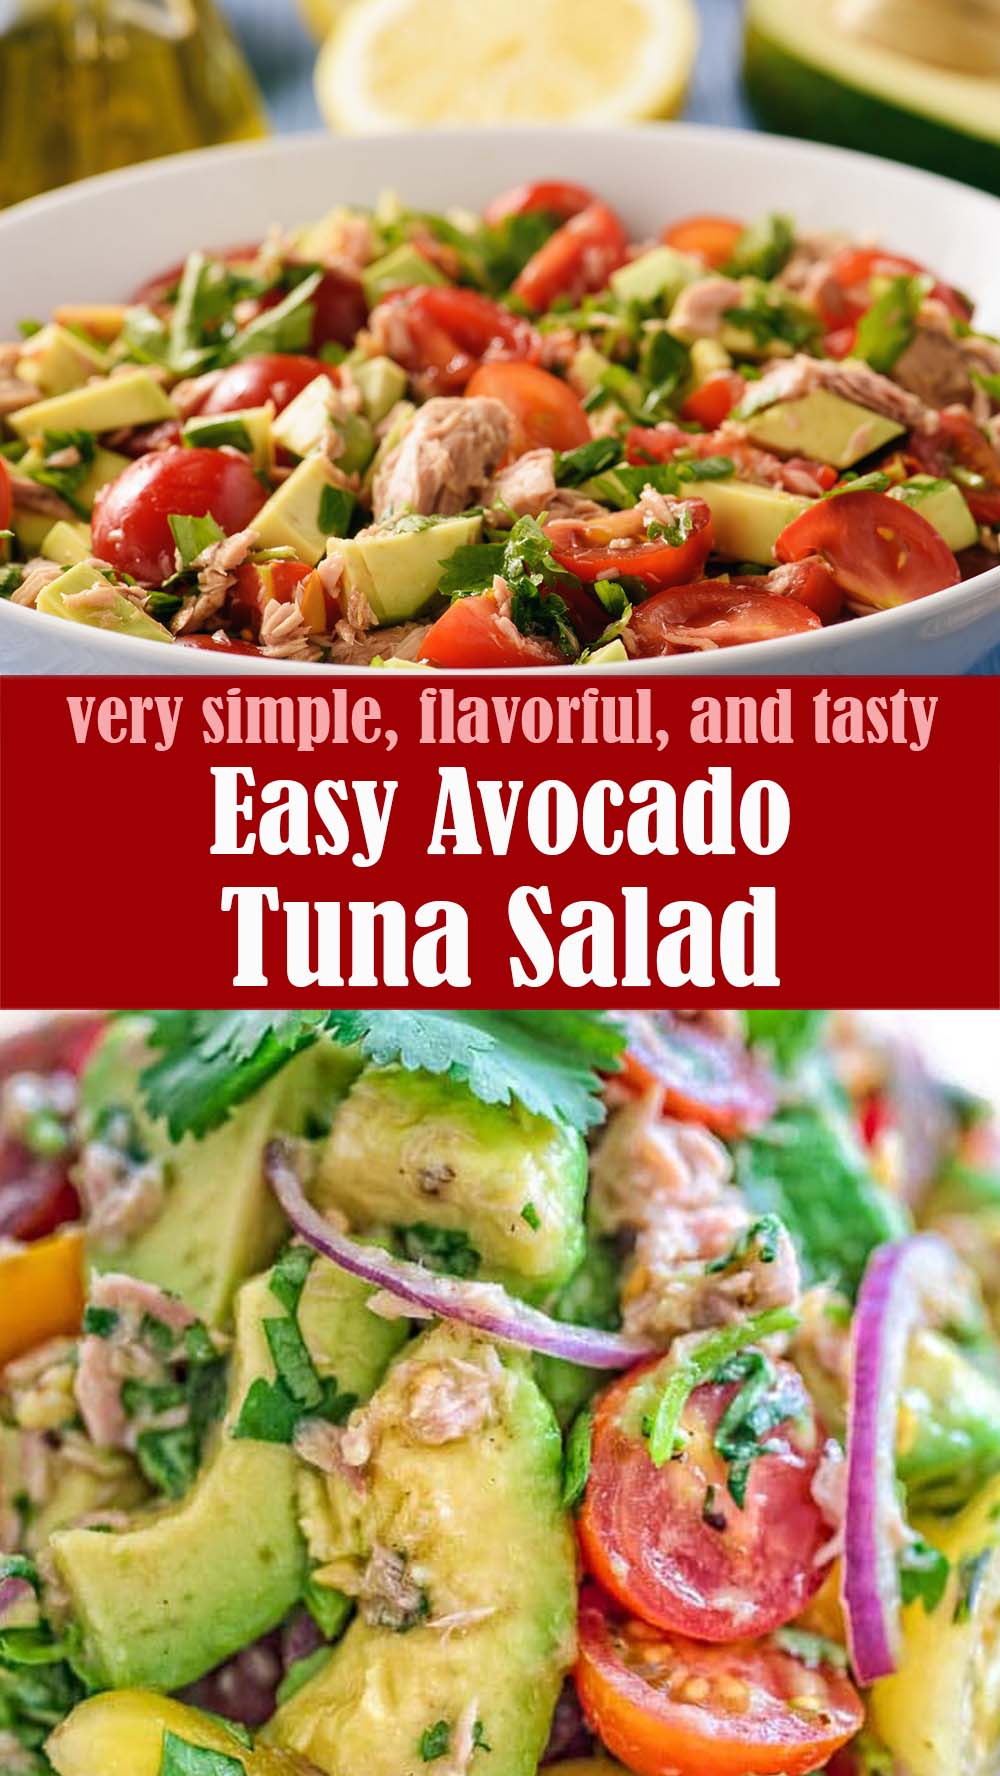 Easy Avocado Tuna Salad